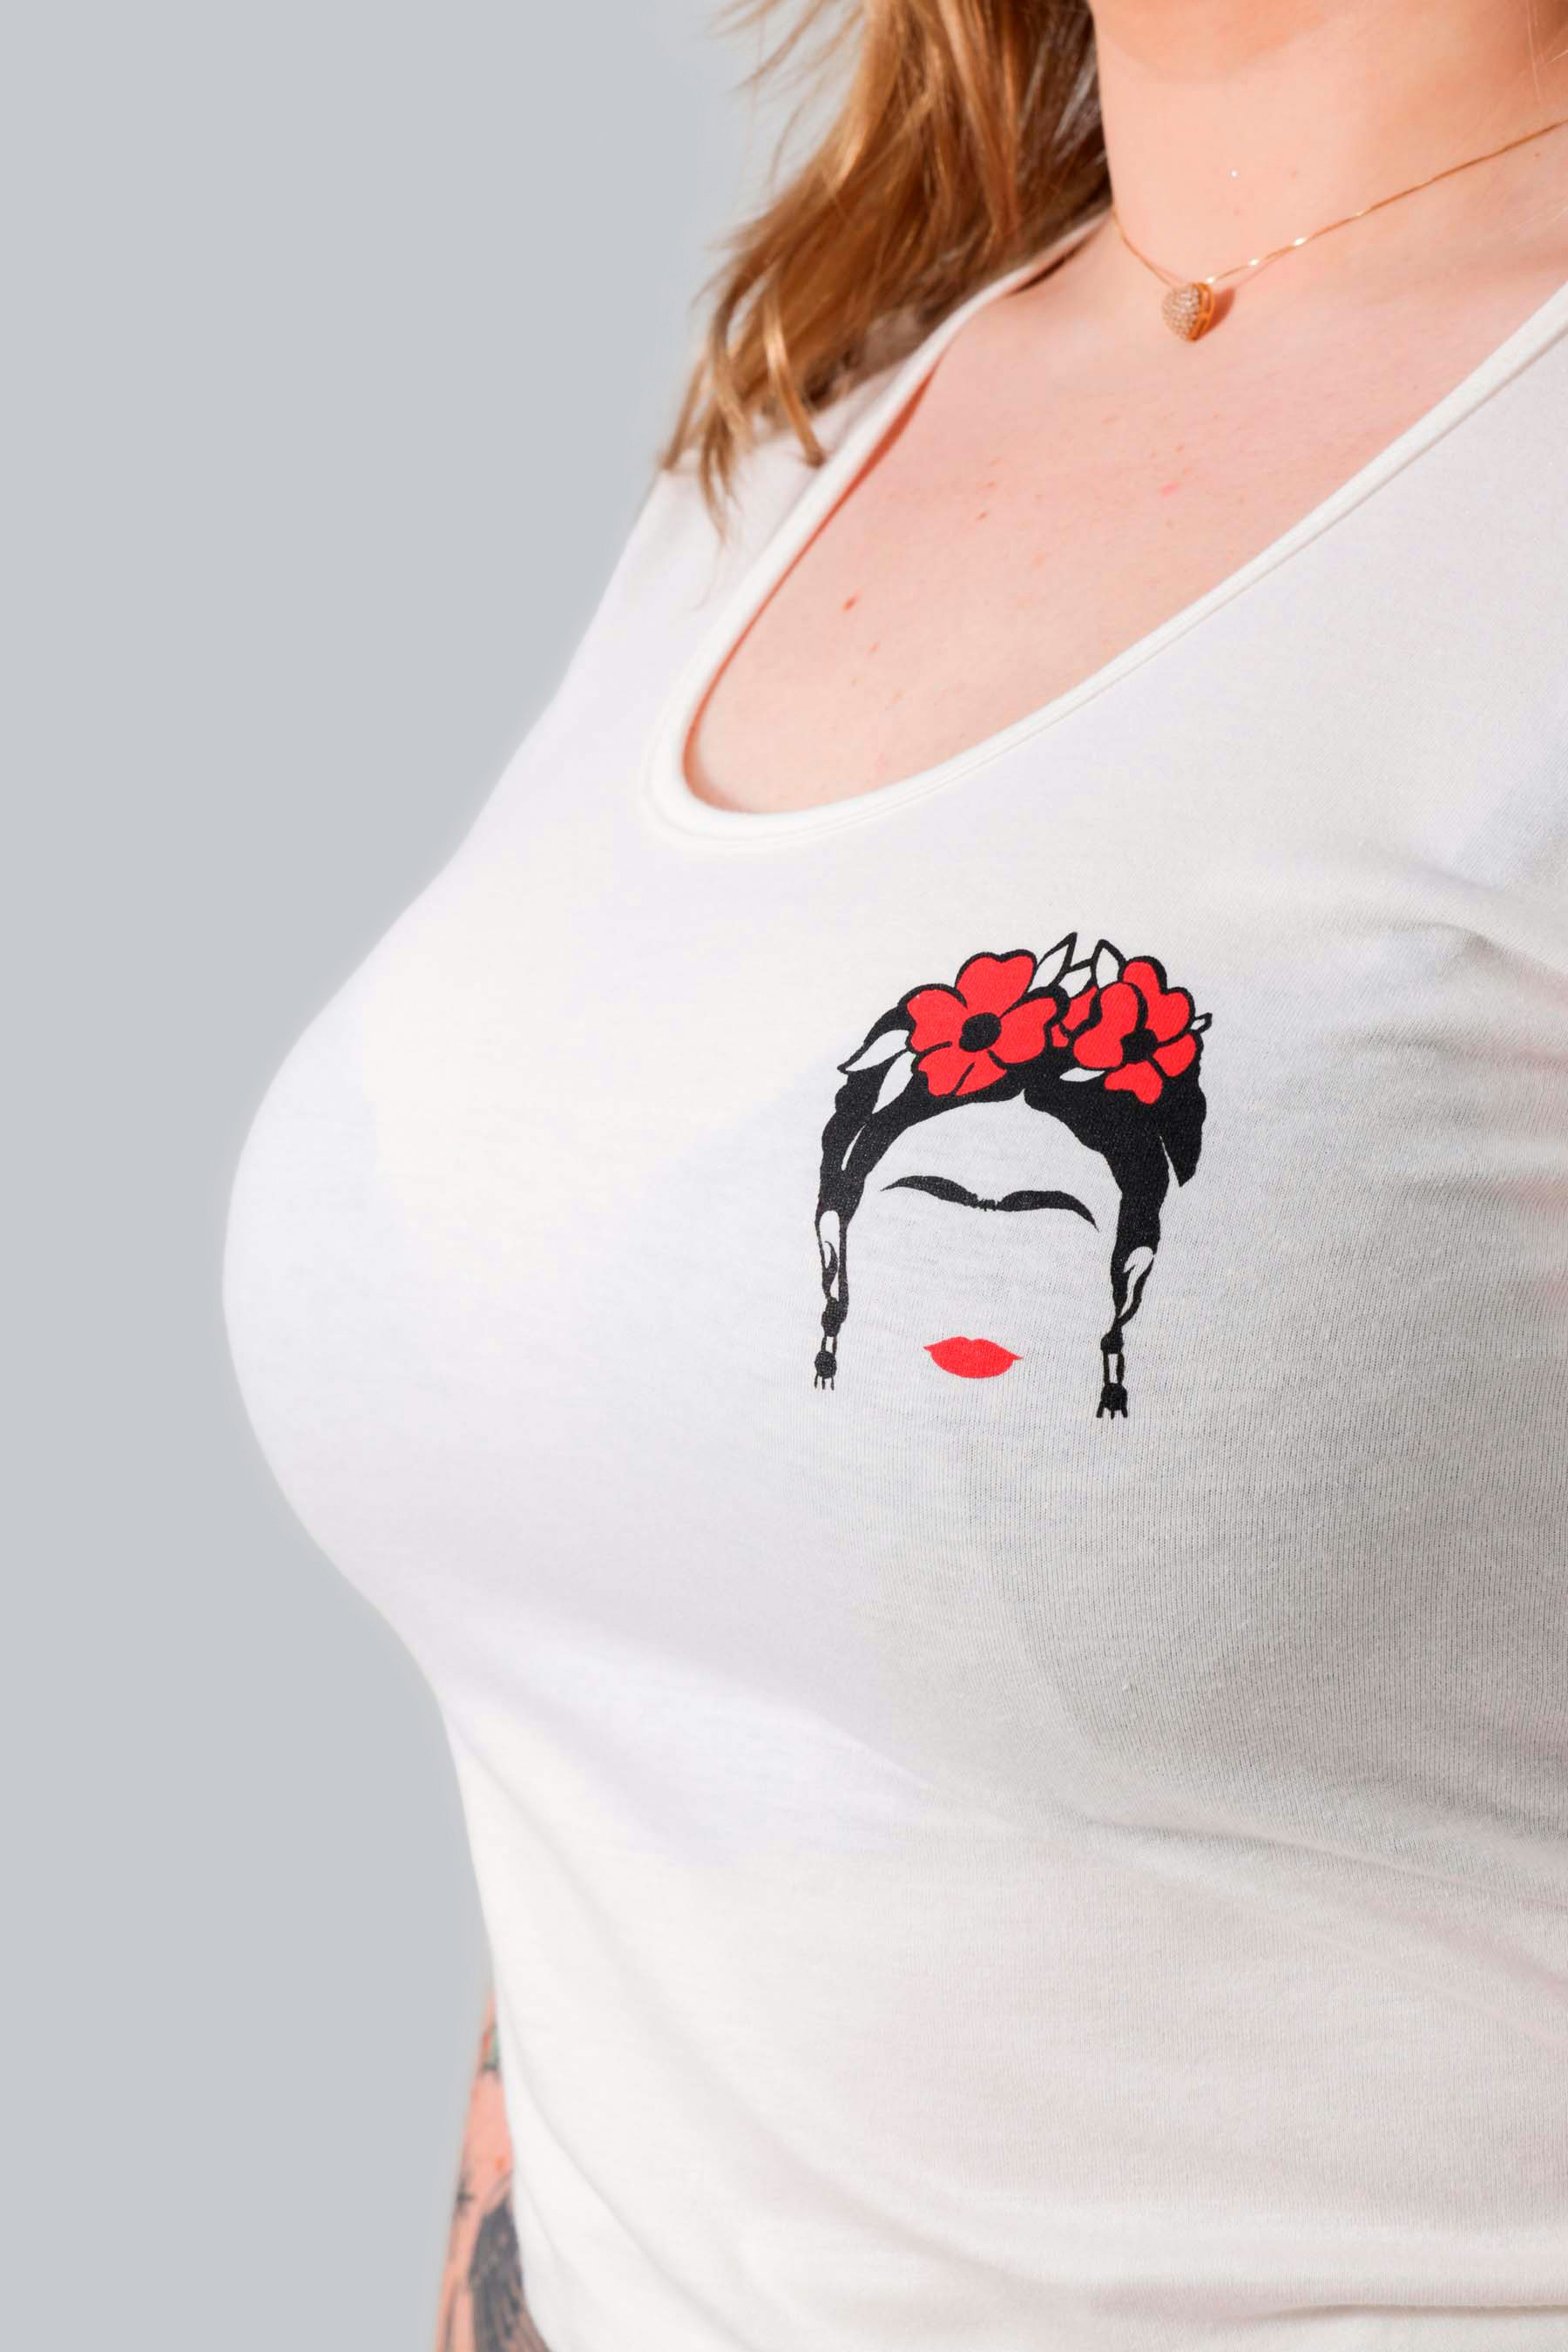 Camiseta Rosto Frida